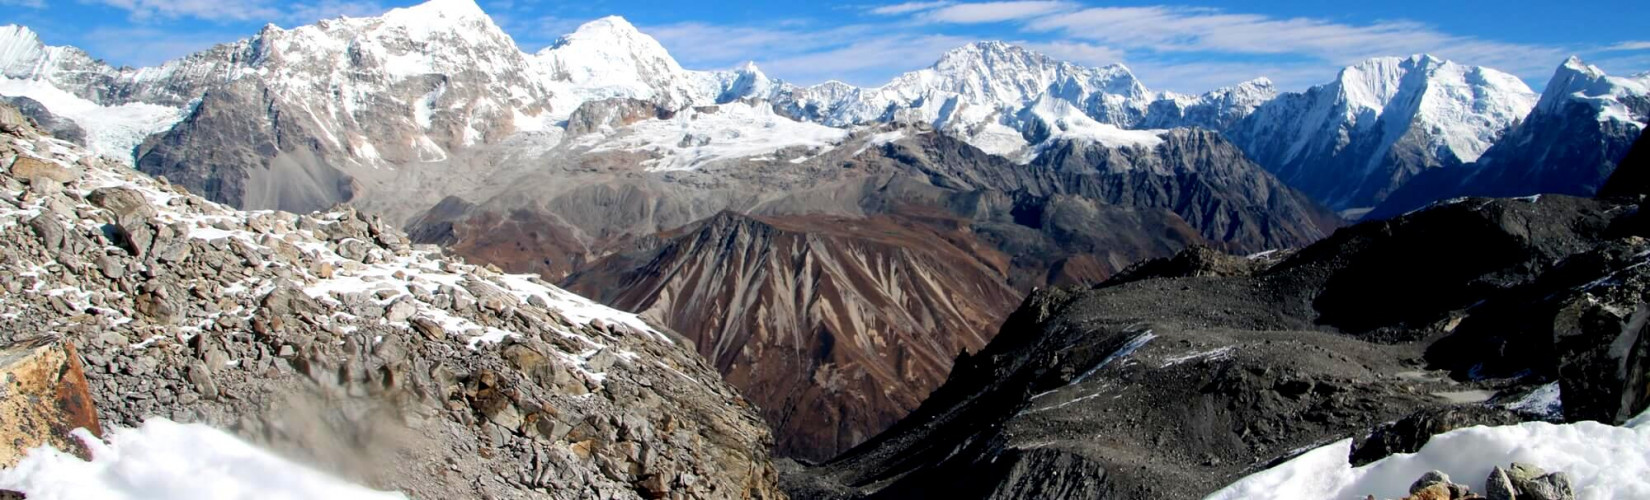 5 Best High Pass Trekking in Nepal